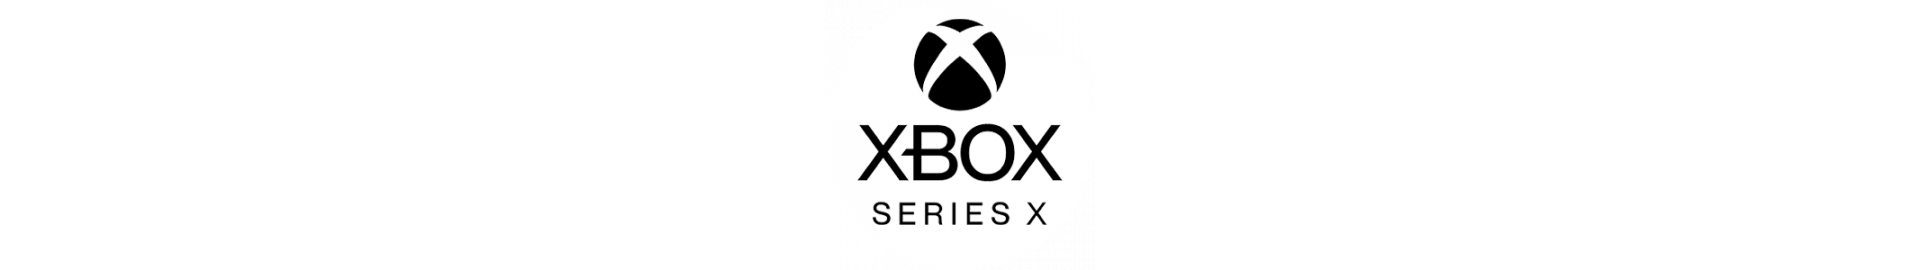 Videojuegos para xbox series x